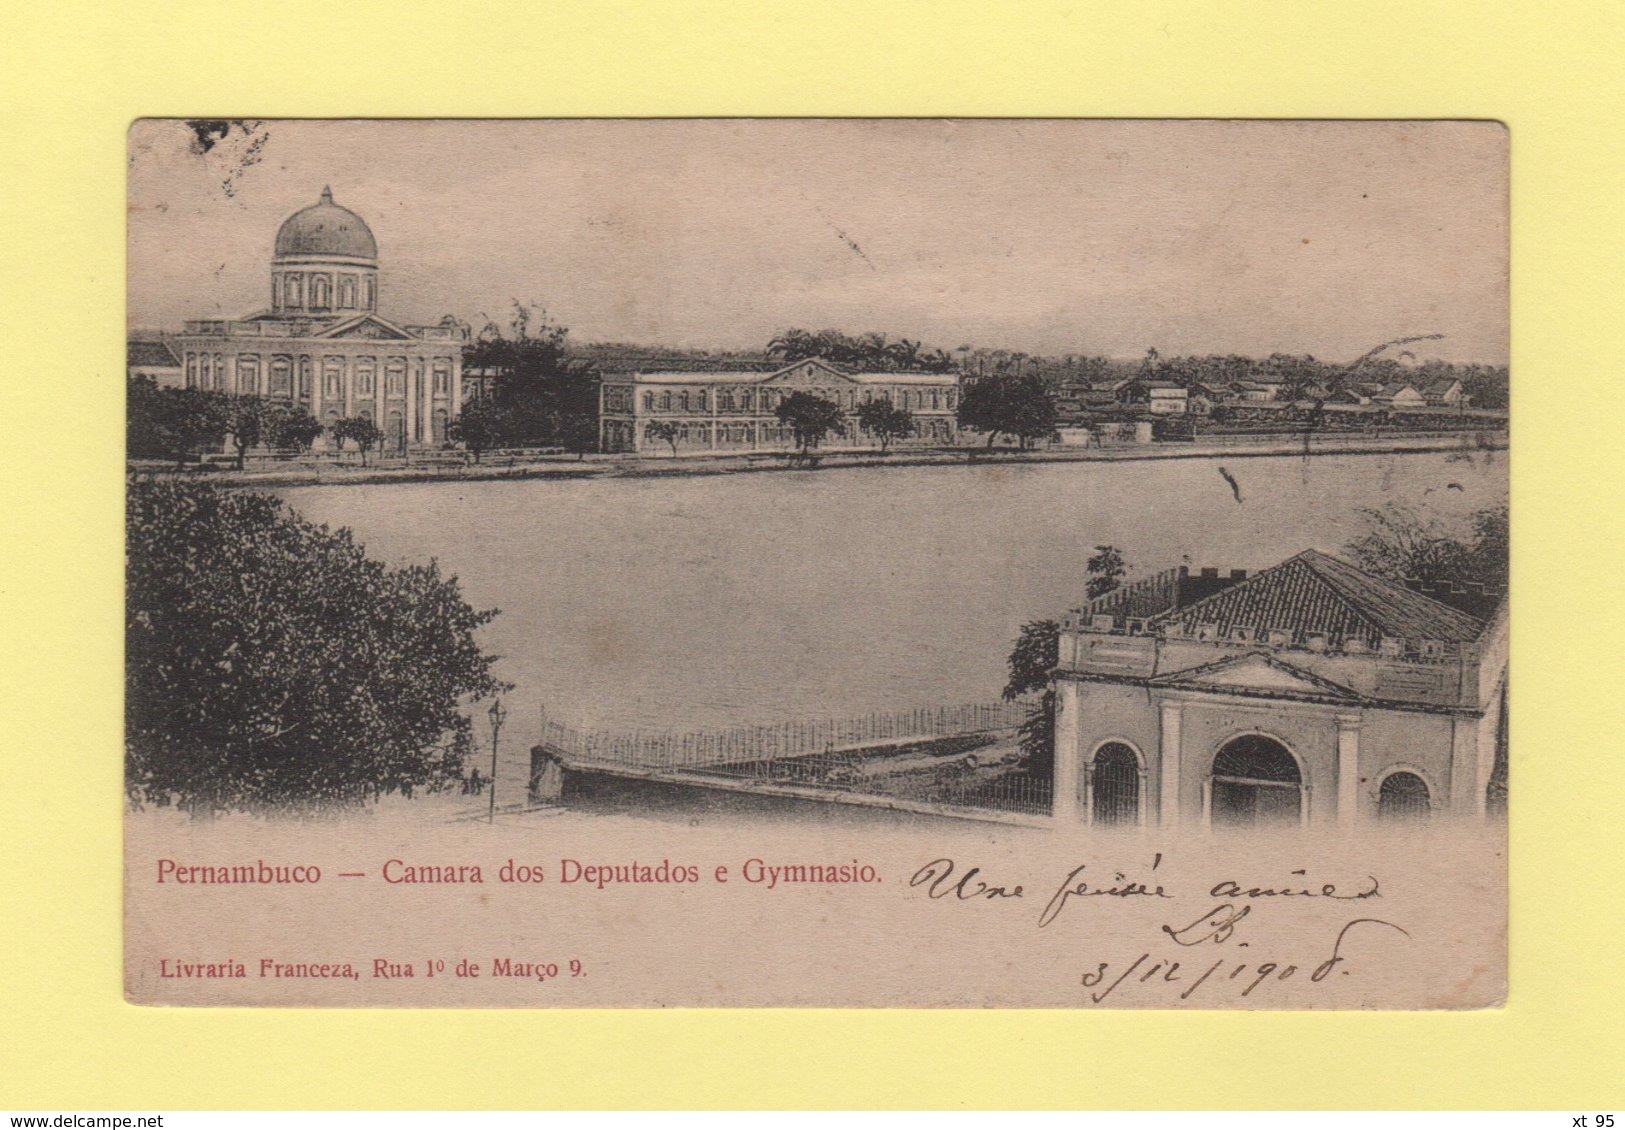 Bordeaux A Buenos Ayres - Ligne K N°2 - 5 Dec 1908 - Carte De Pernambuco - Type Semeuse - Poste Maritime